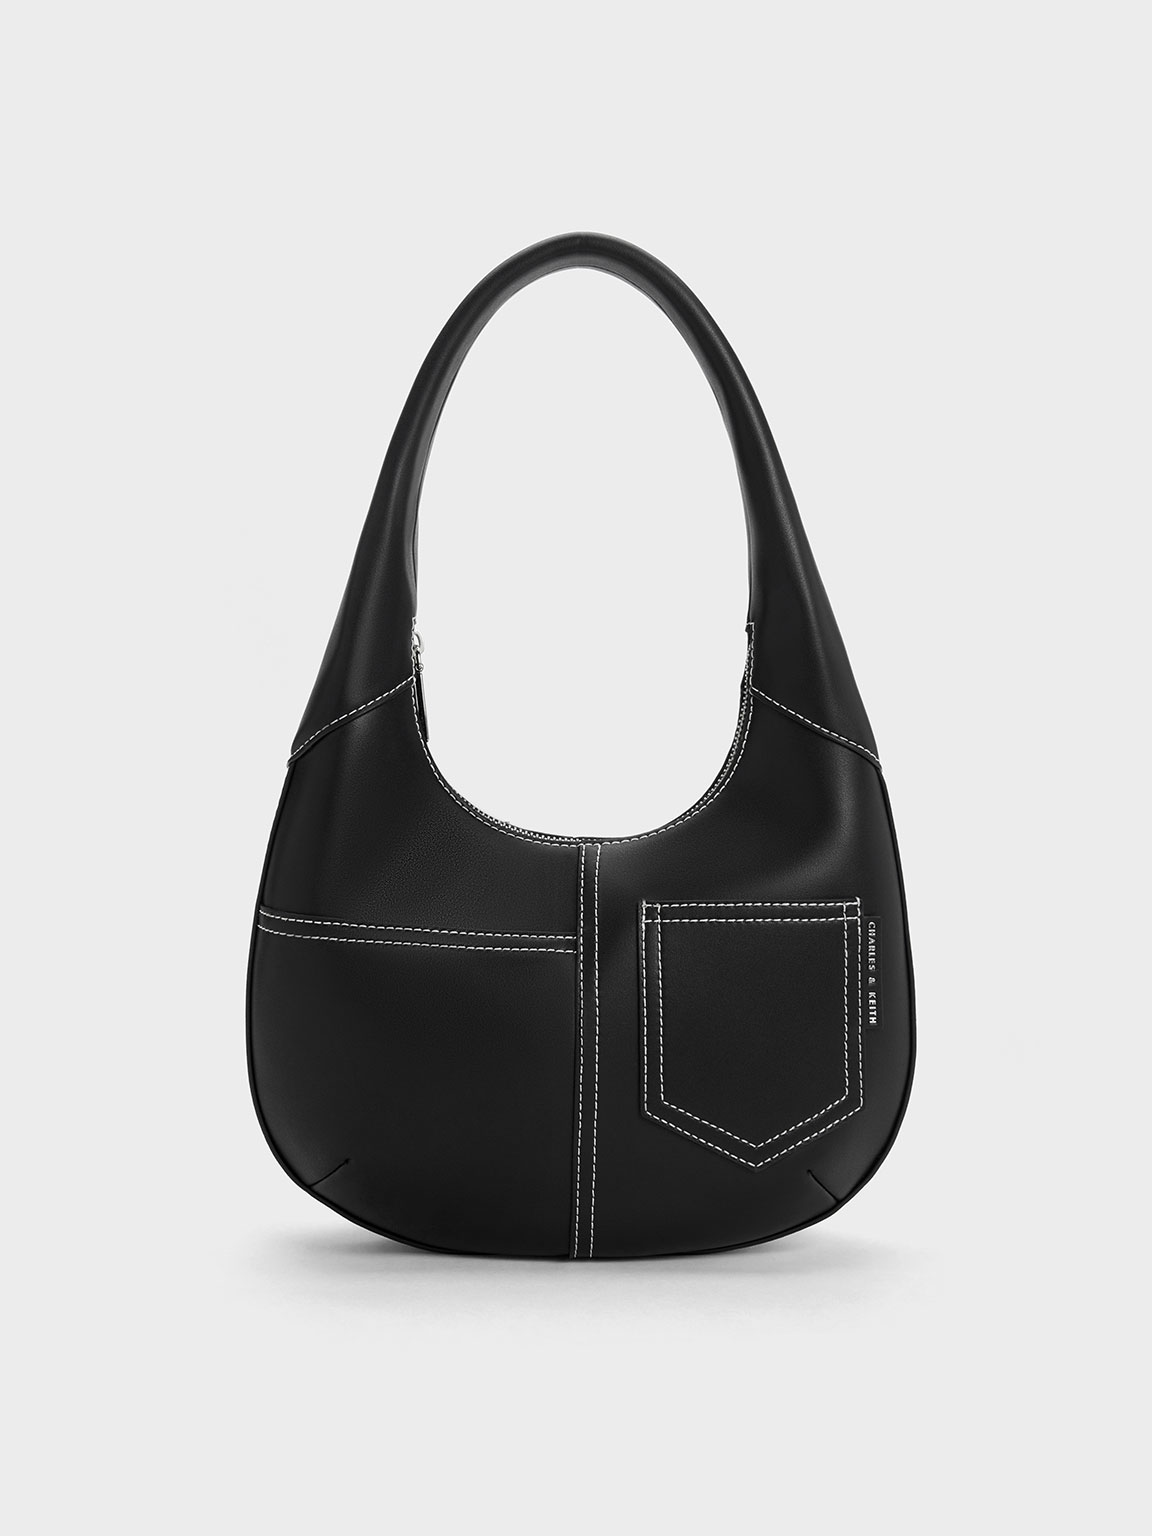 Hand Bag Black Charles Keith Leather Ladies Purse